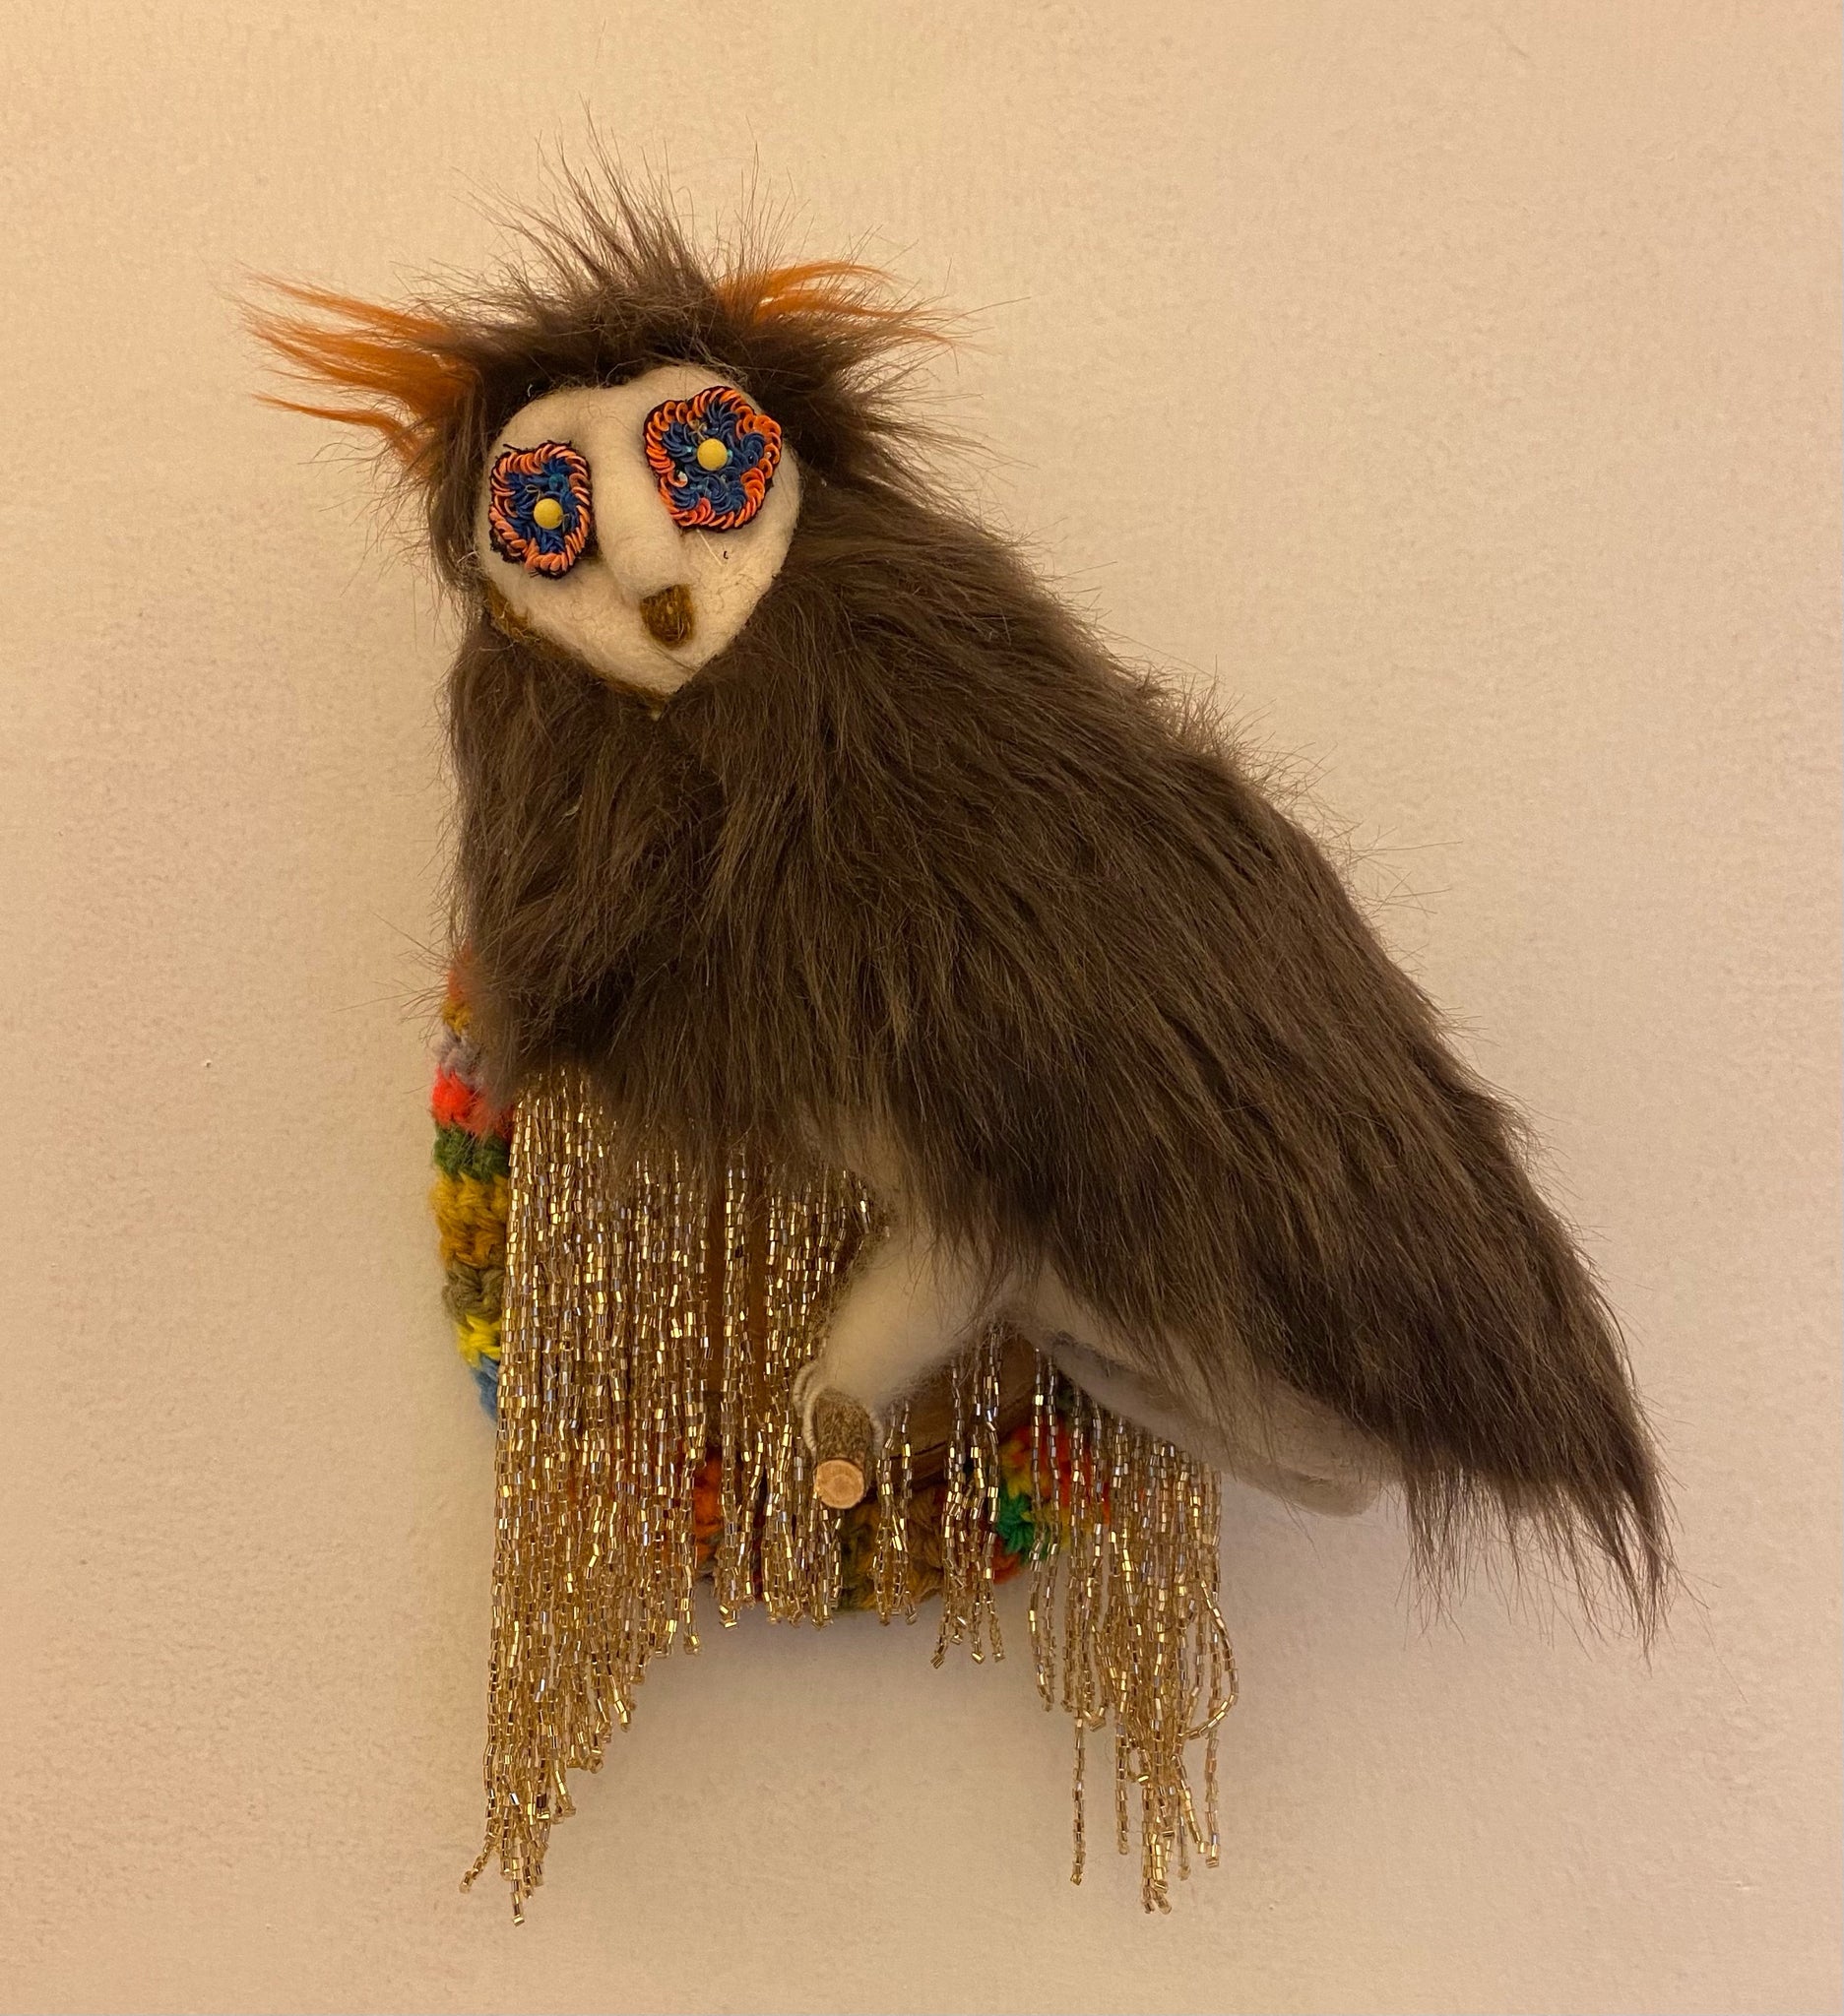 Jeila Gueramian, "Owl"